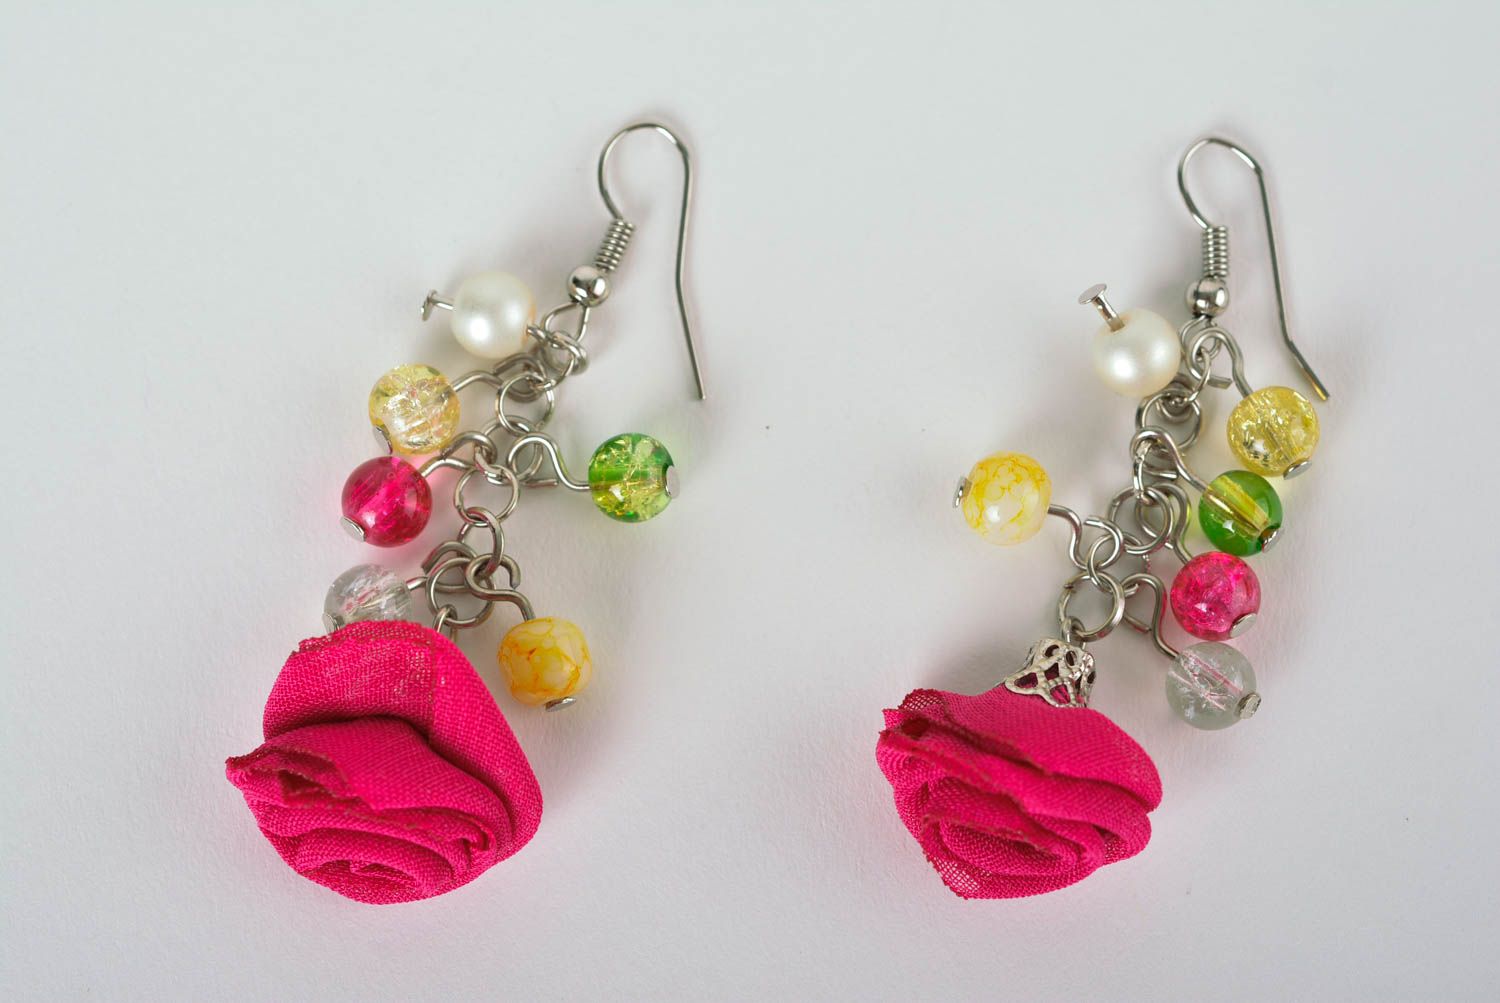 Handmade beautiful earrings stylish female earrings unusual jewelry for girls photo 1